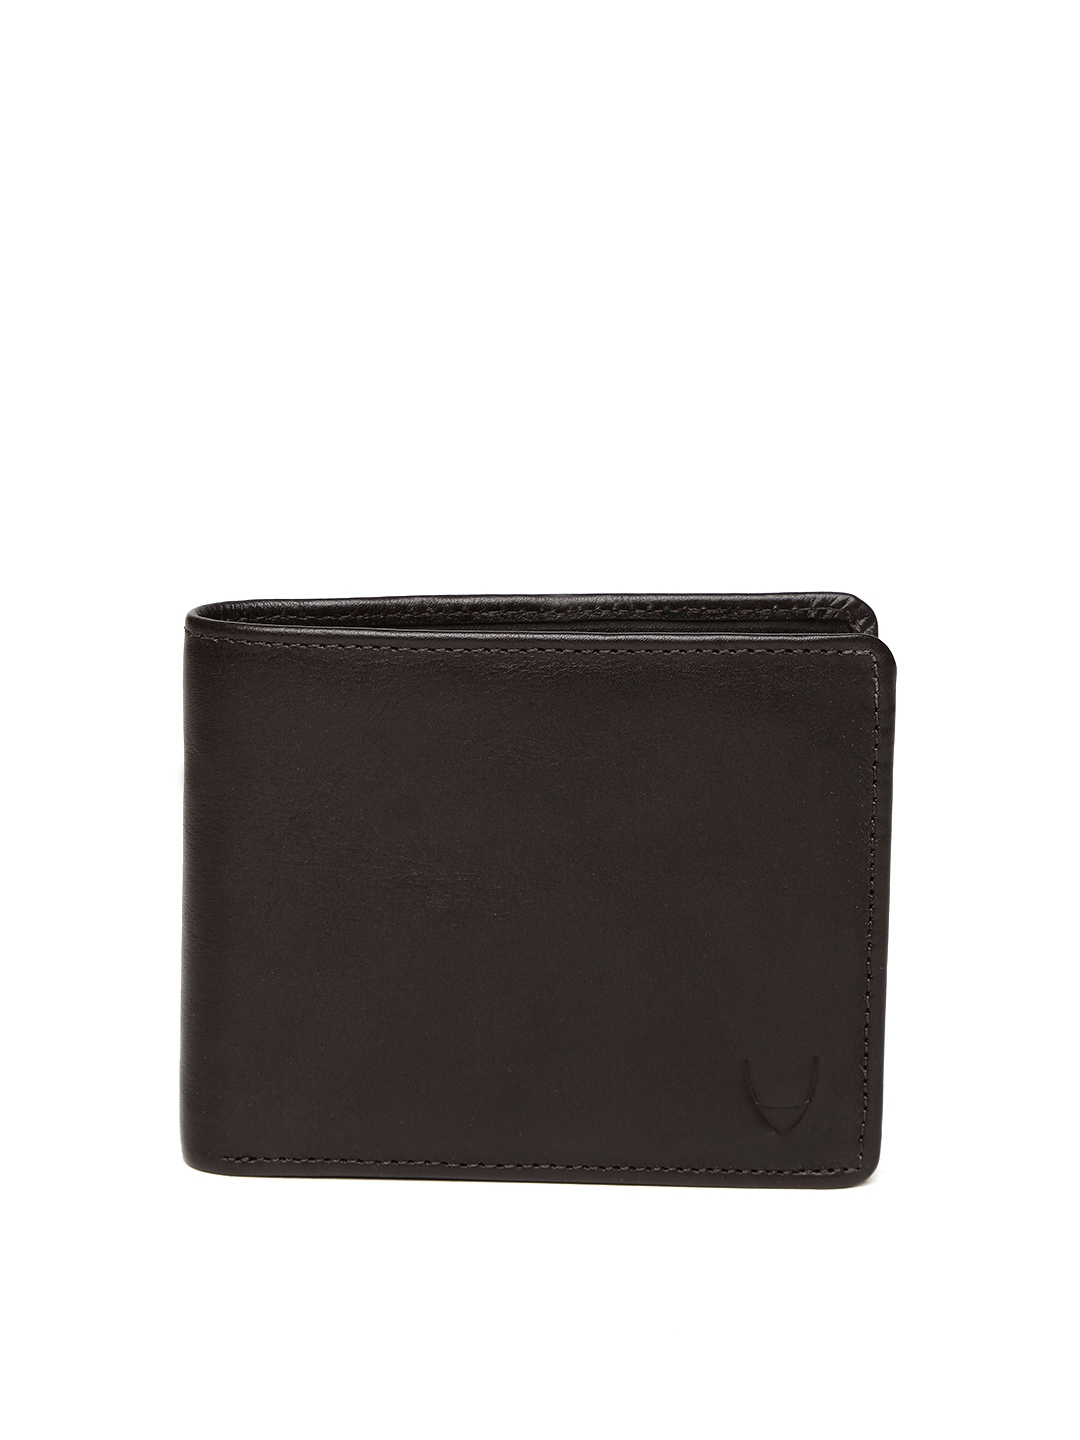 Buy Hidesign Men Brown Leather Wallet - Wallets for Men 1862749 | Myntra